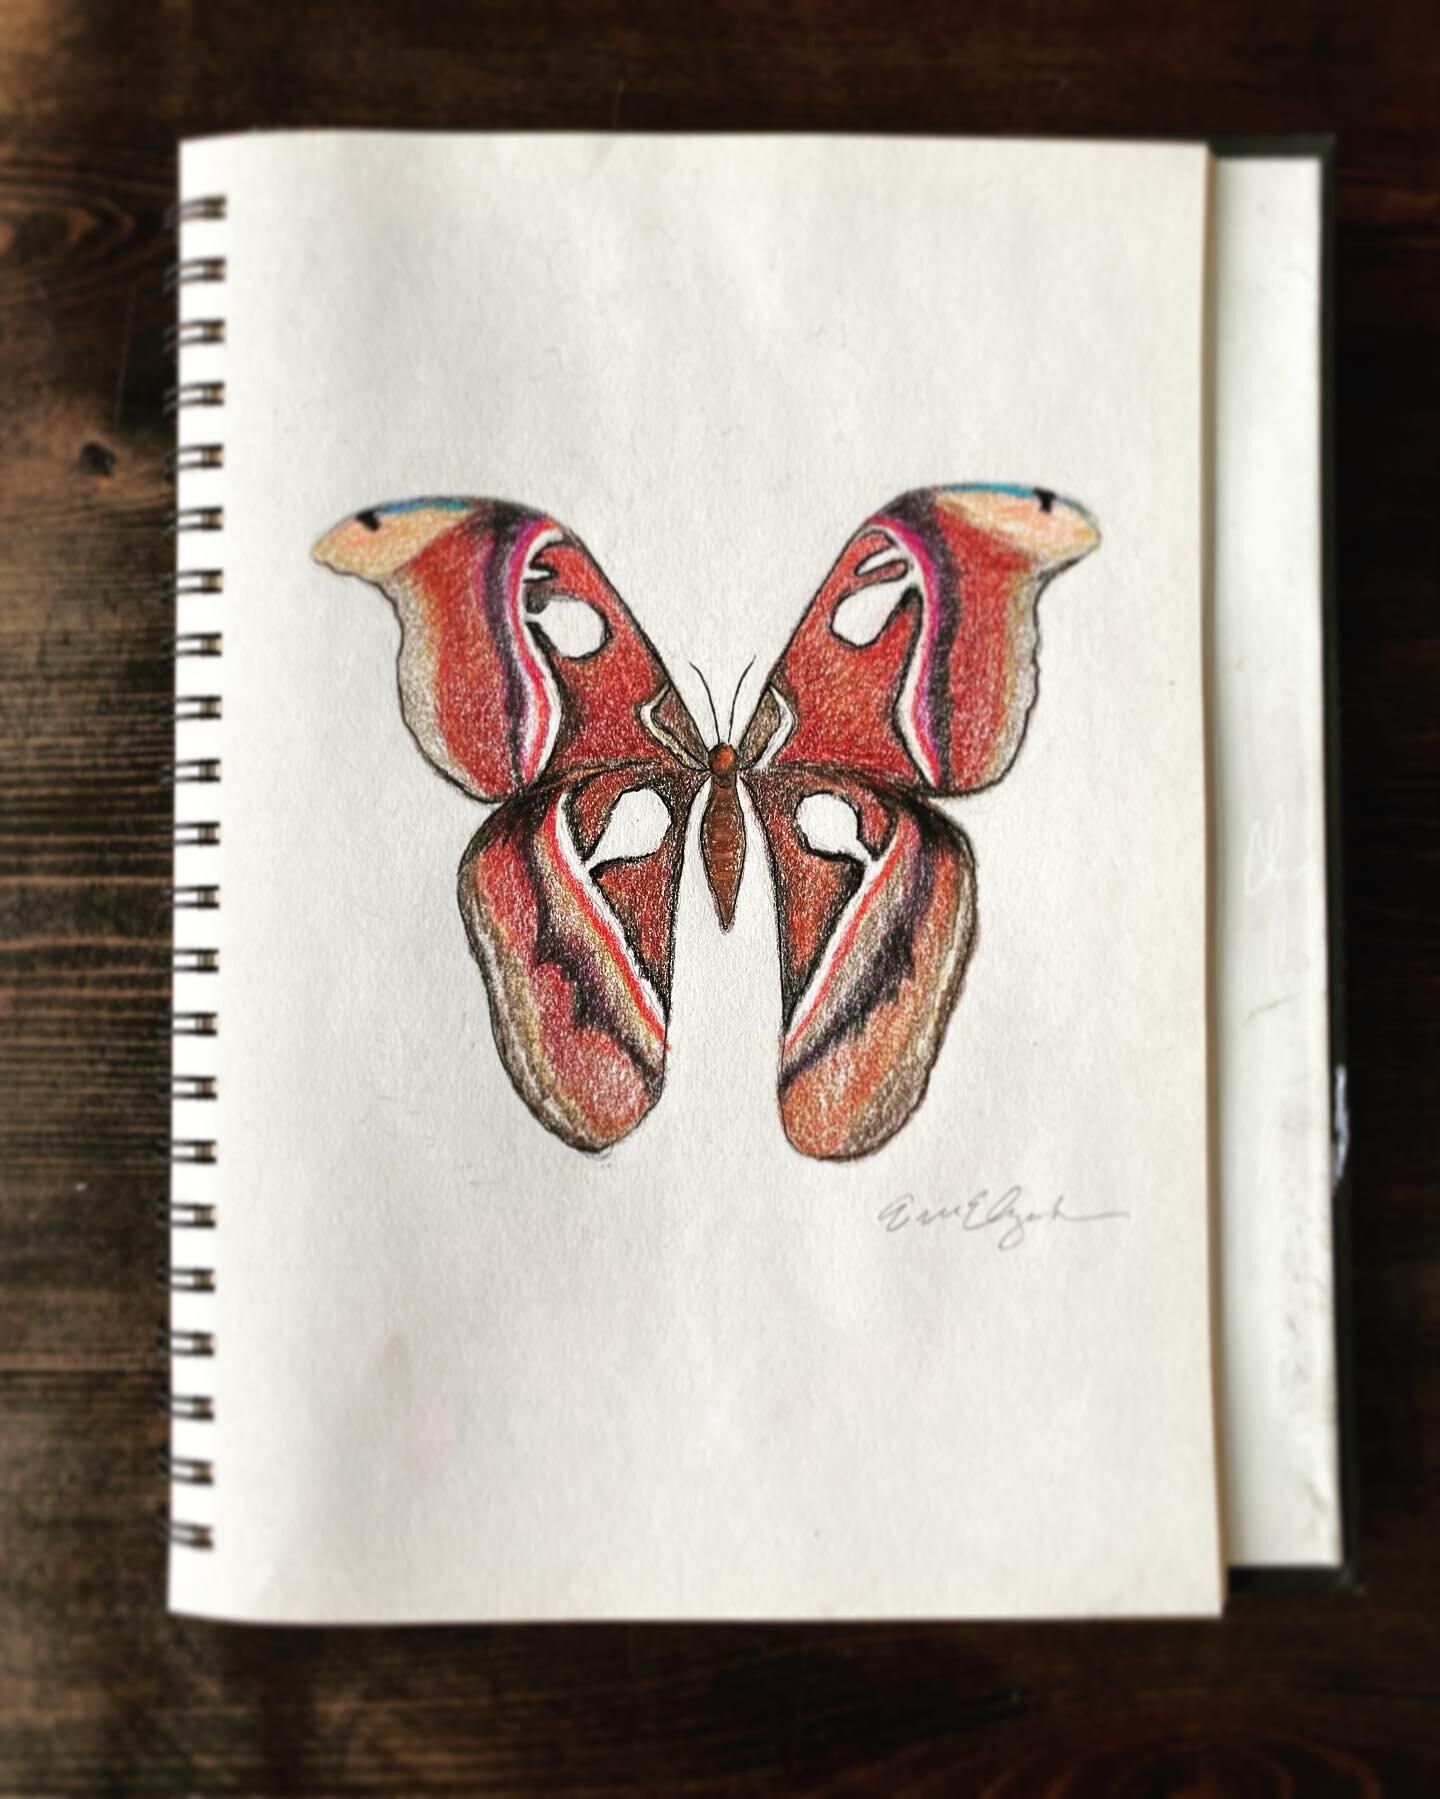 A drawing to commemorate National Moth Week. 🤎#nationalmothweek #moth 

.
.
.
.
.
#artbyerinelizabeth #journal #sketchbook #nature #artist #draw #paint #magic #mixedmedia